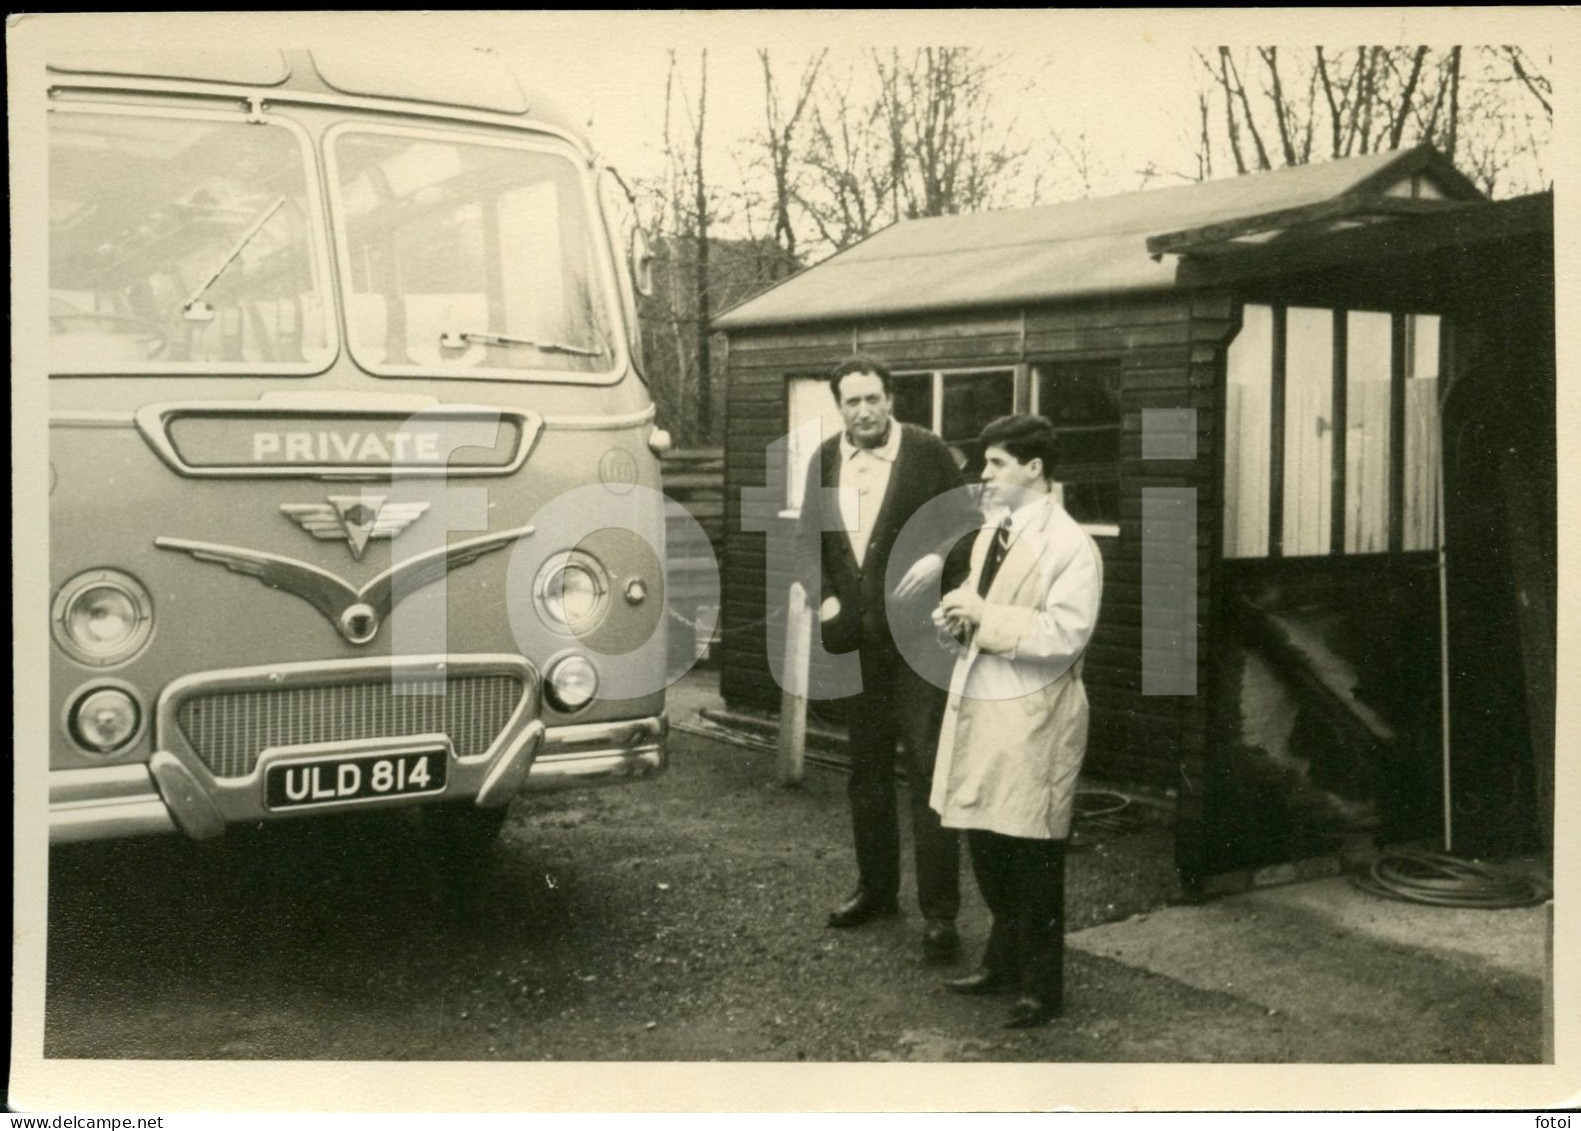 1955 ORIGINAL AMATEUR PHOTO FOTO AEC RELIANCE PRIVATE AUTOBUS BUS AUTO BUSES UK ENGLAND UNITED KINGDOM POSTCARD SIZE AT - Cars